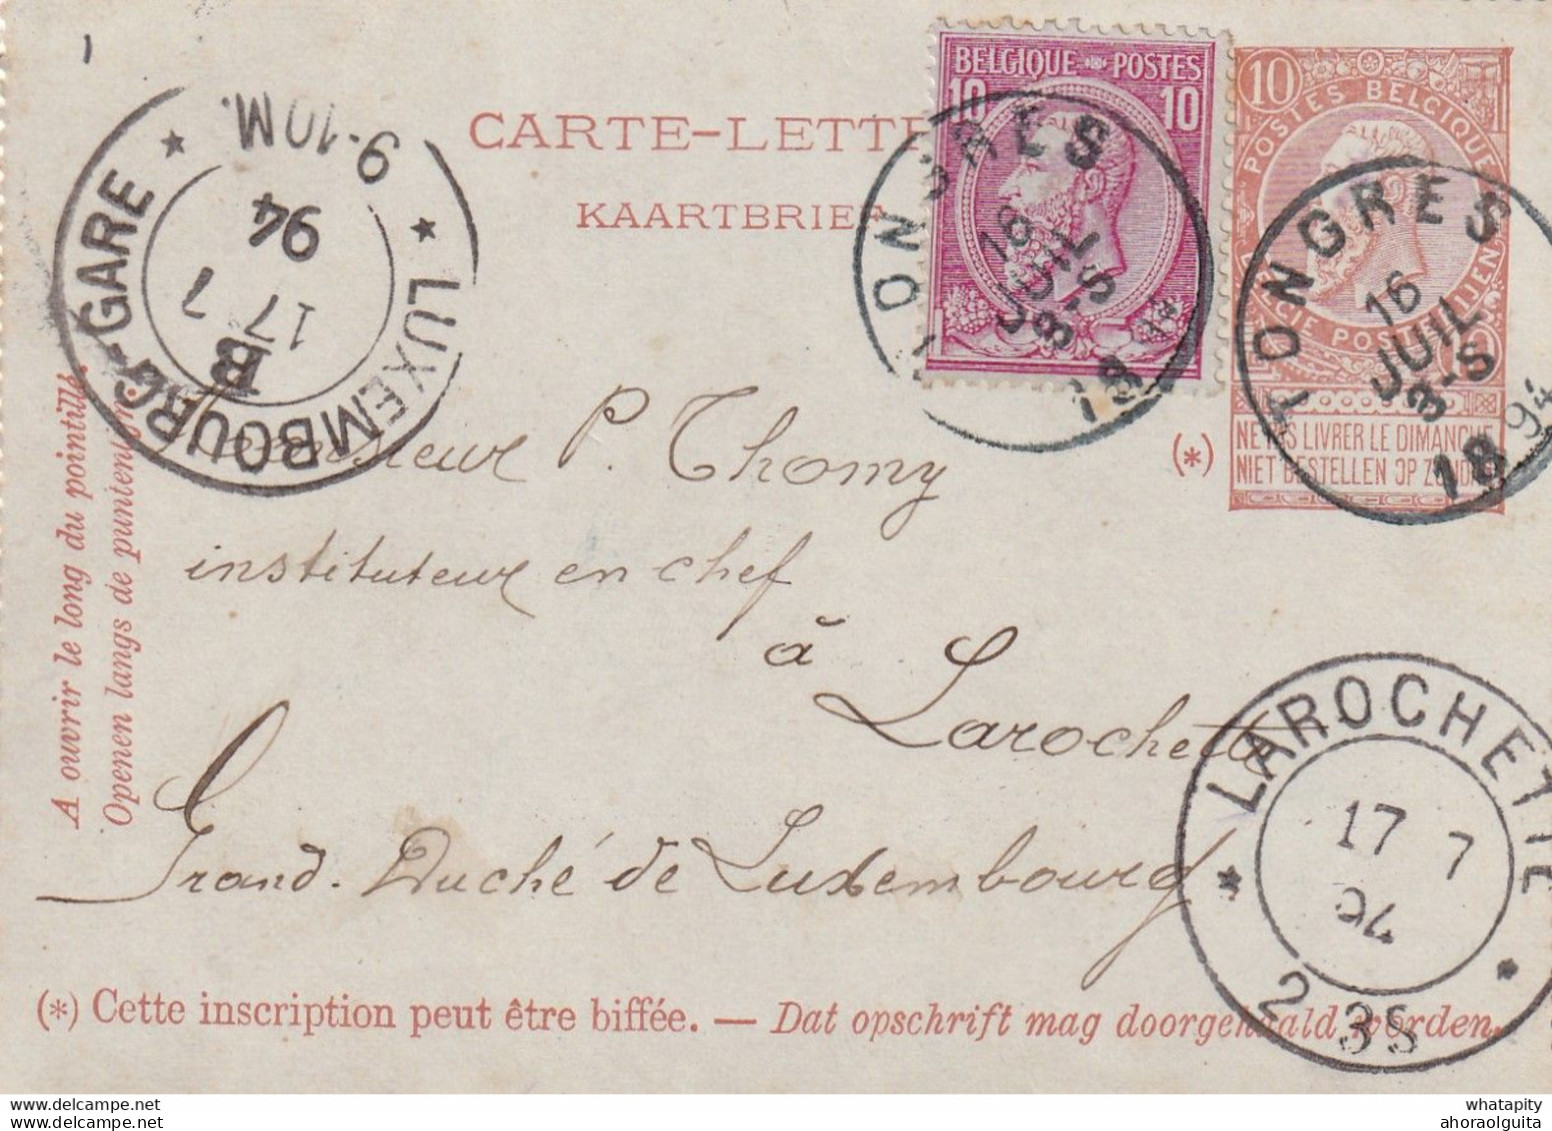 DDX971  -  Carte-Lettre Fine Barbe + TP 46 TONGRES 1894 Vers LAROCHETTE  - TARIF PREFERENTIEL LUXEMBOURG - Cartes-lettres